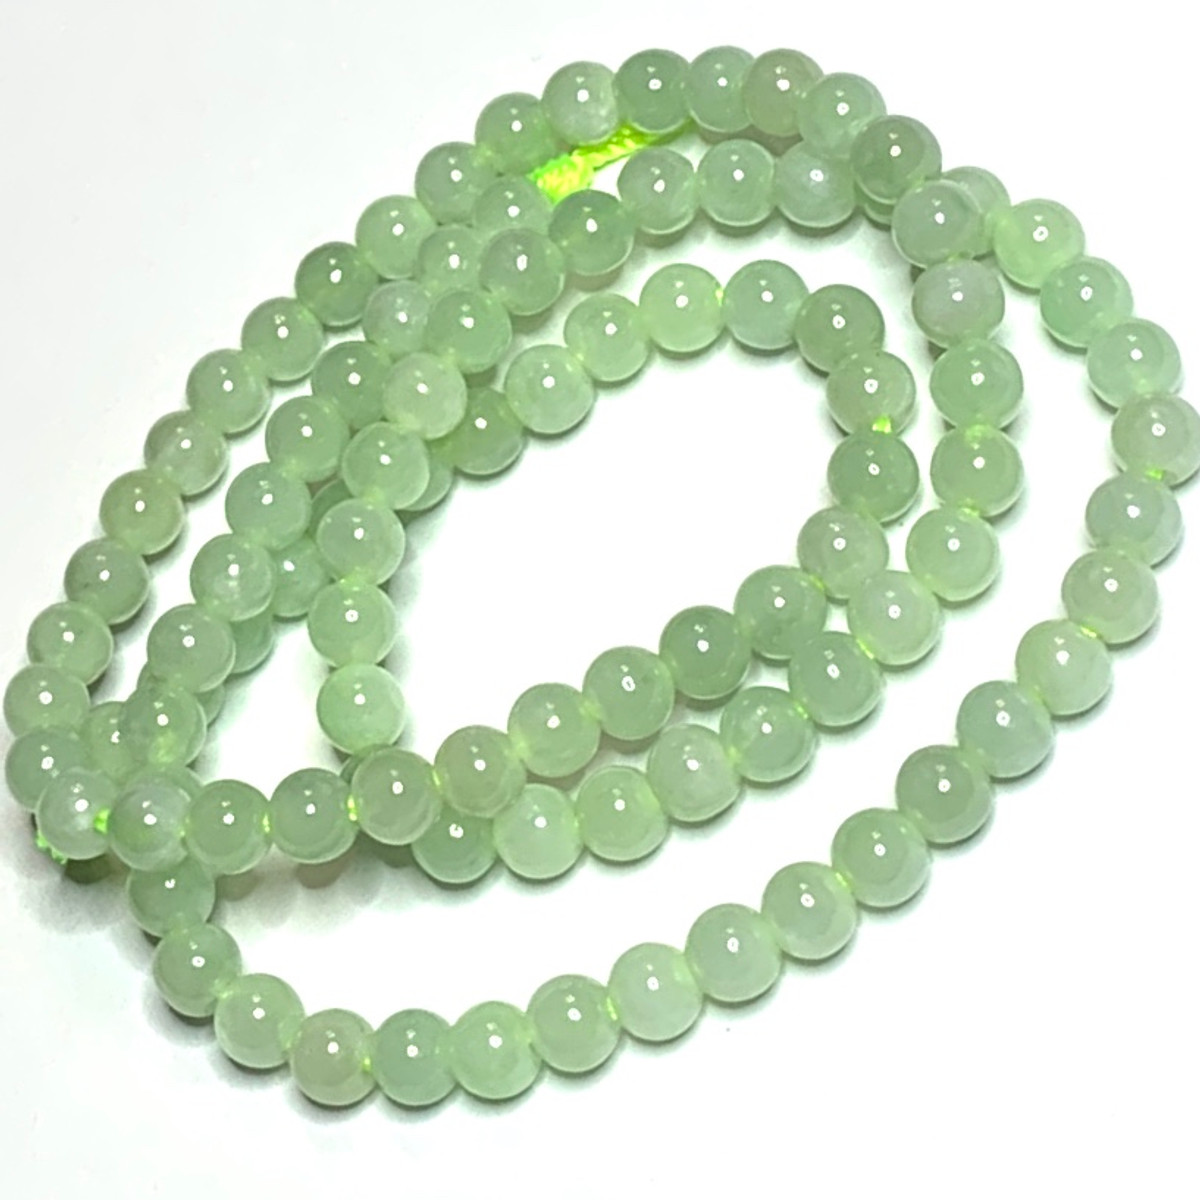 Highly Polished Burma Jade Round Beads-4mm (SP3323)